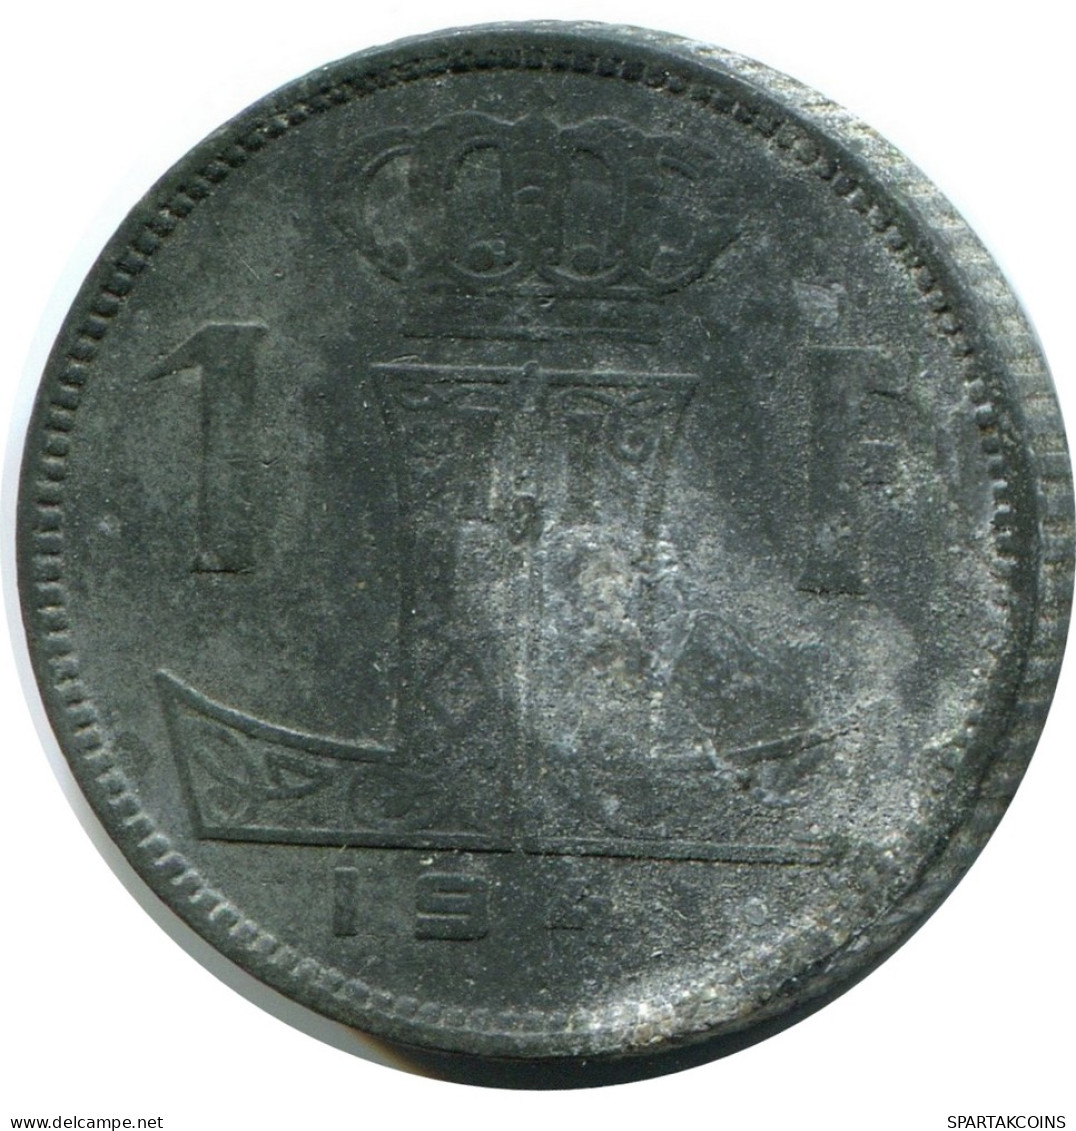 1 FRANC 1944 BELGIQUE-BELGIE BELGIEN BELGIUM Münze #AW915.D - 1 Franc